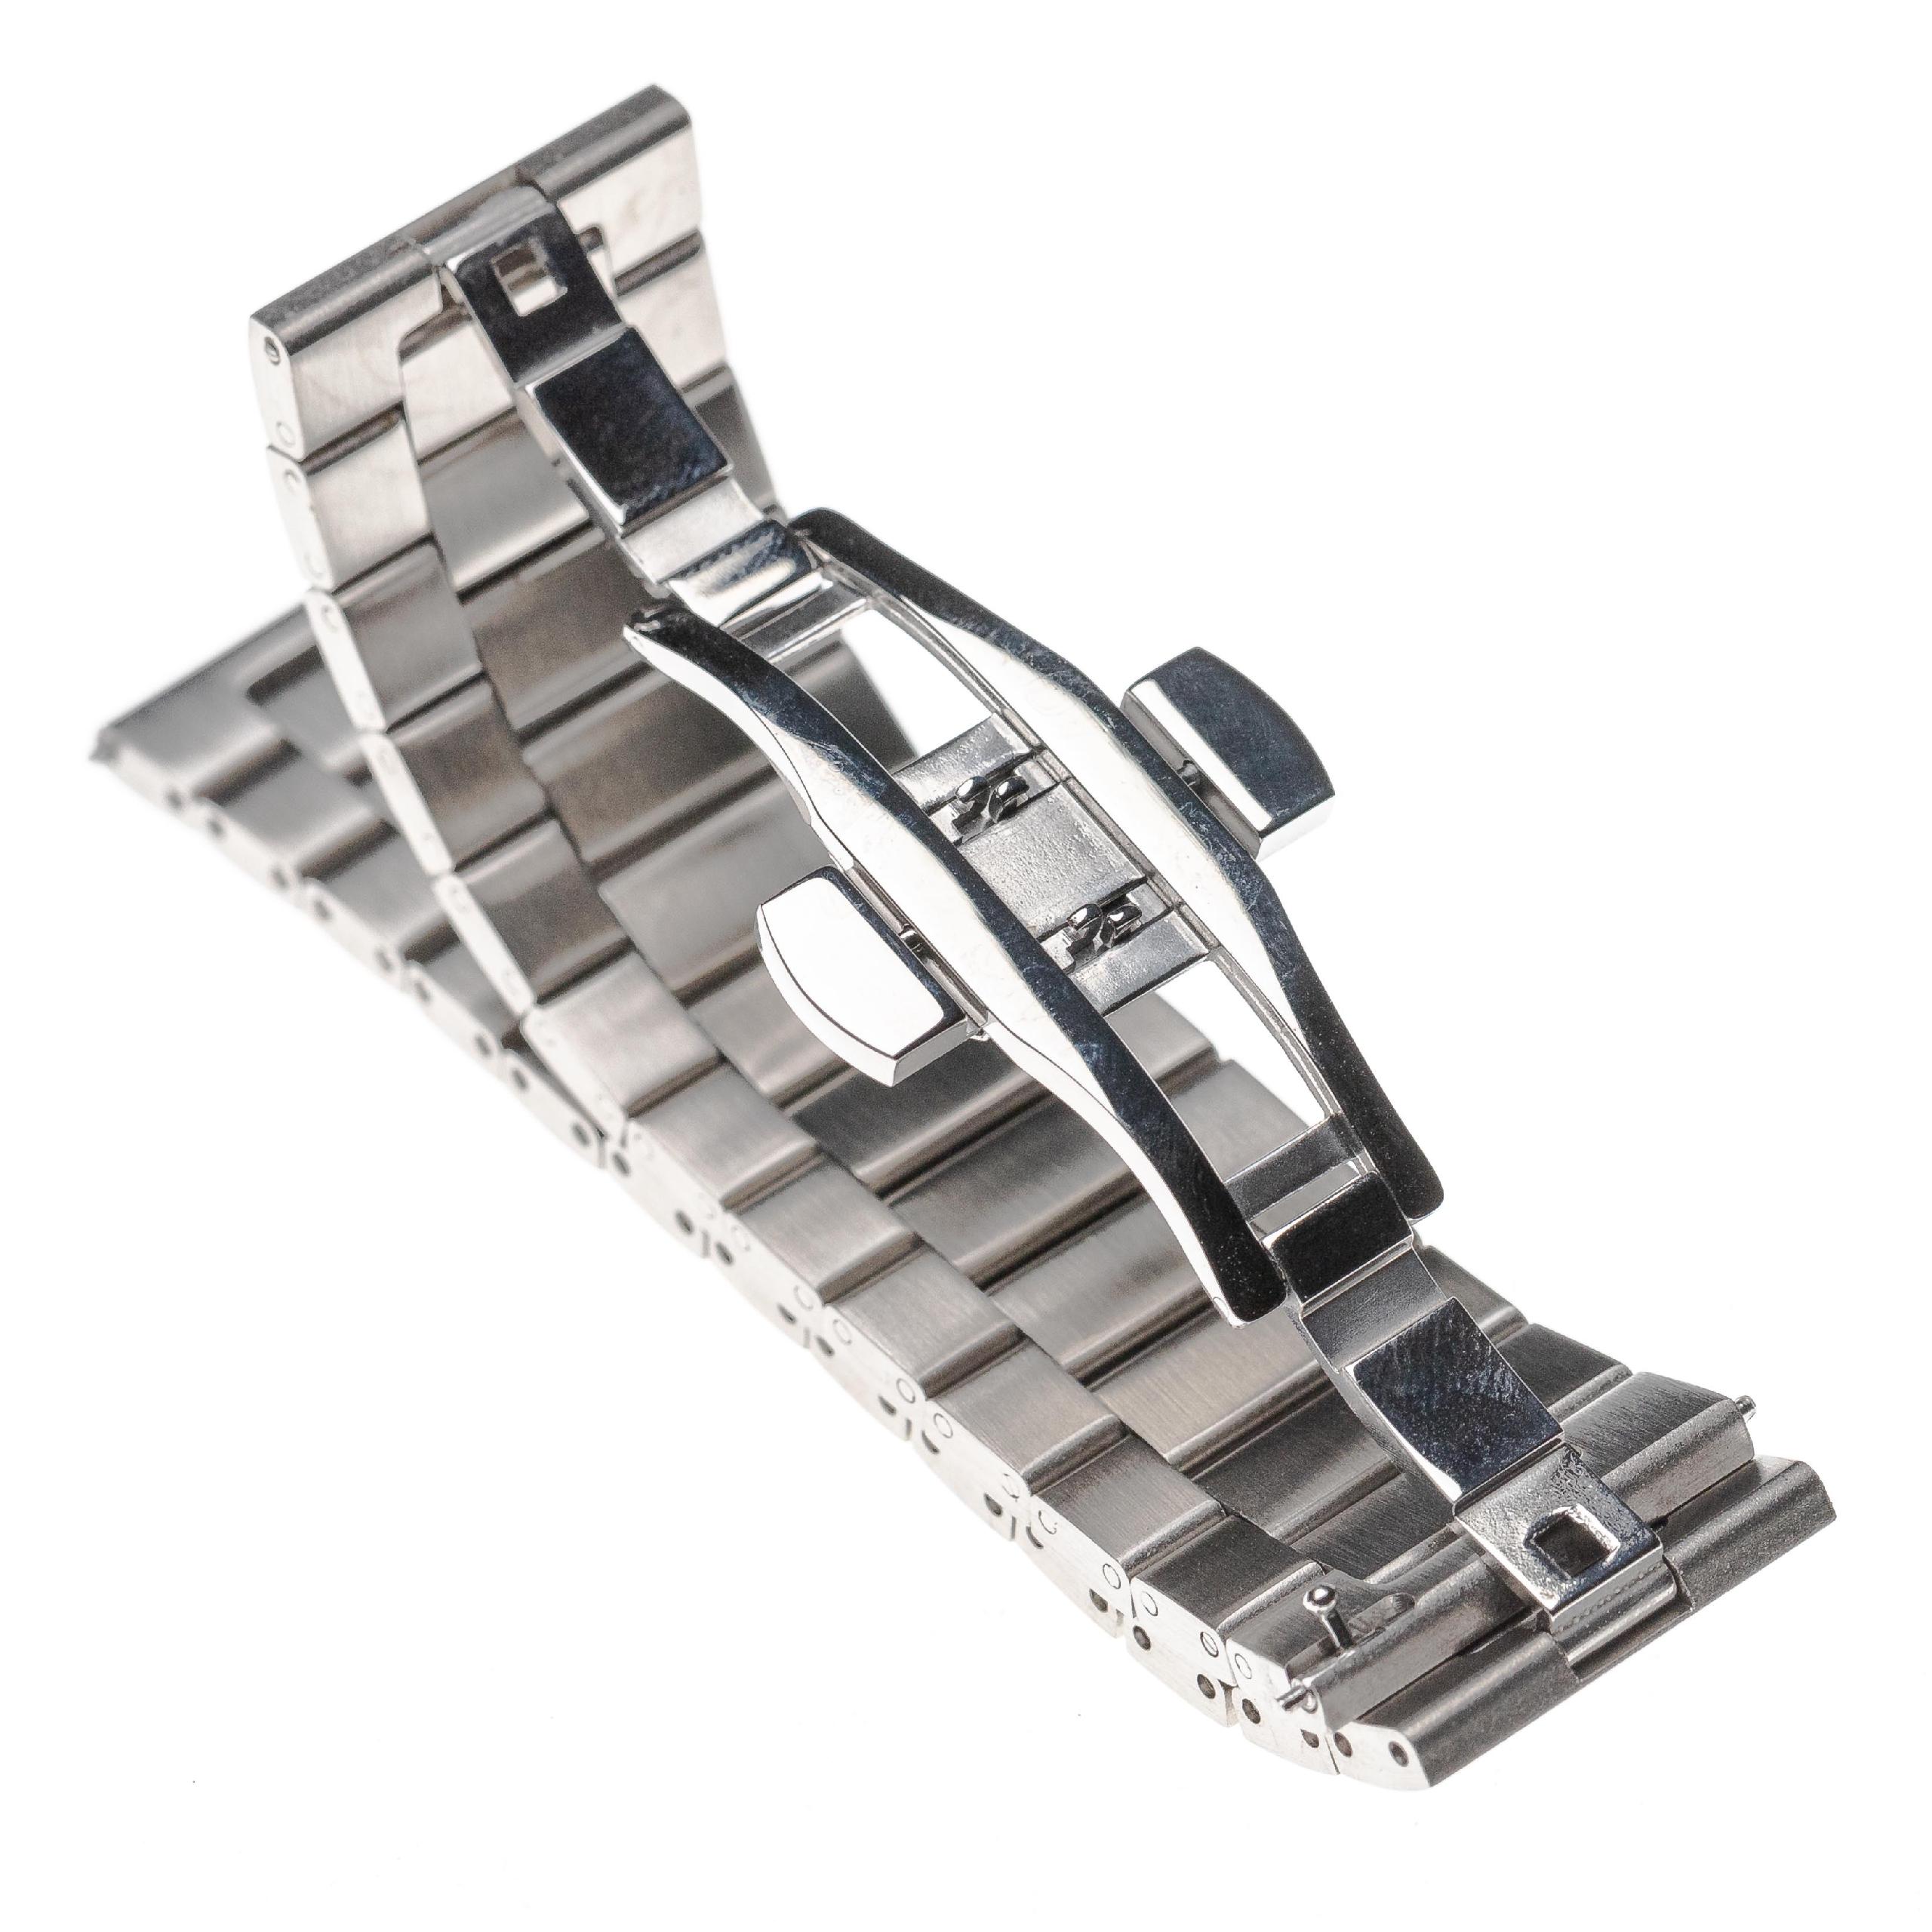 cinturino per Samsung Galaxy Watch Smartwatch - 17,4 cm lunghezza, 20mm ampiezza, acciaio inox, argento